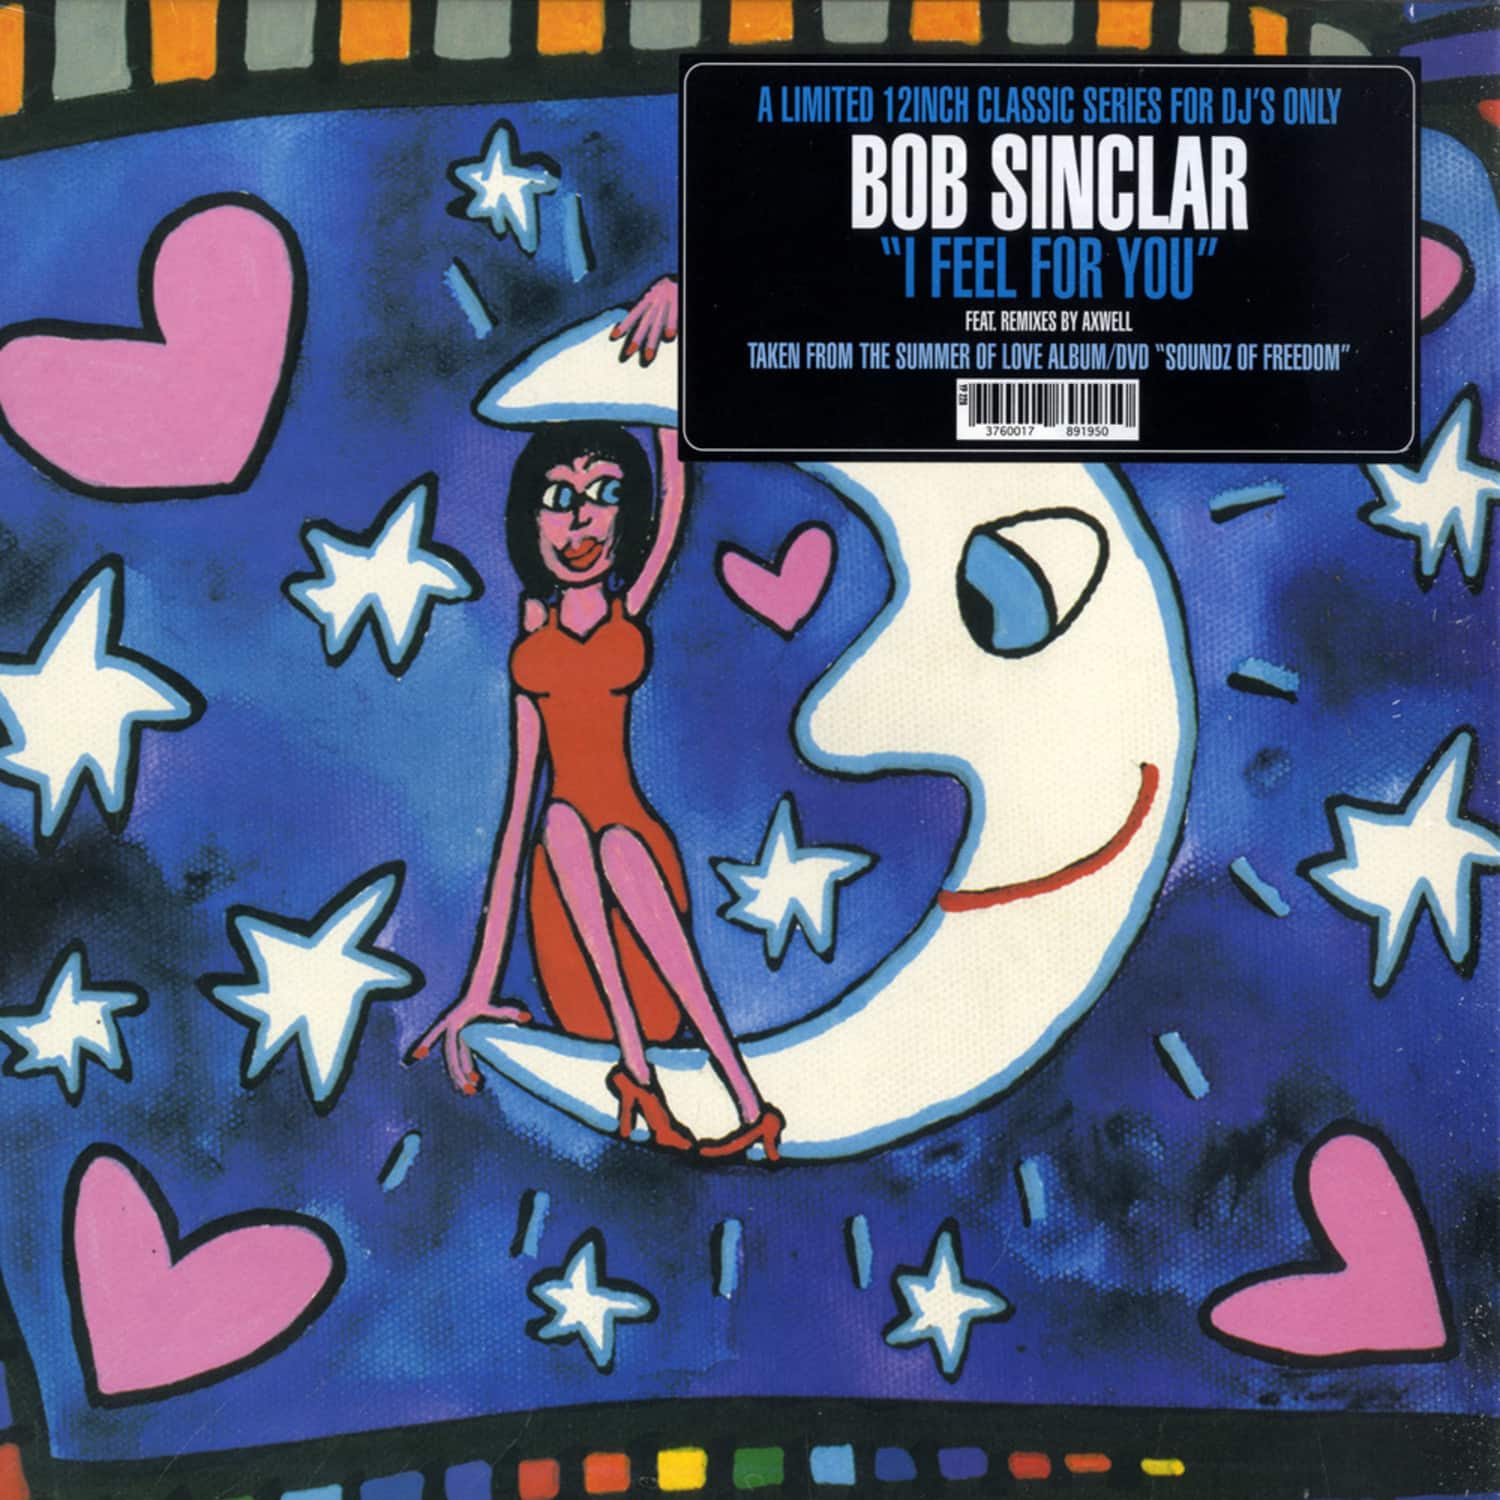 Bob Sinclar - I FEEL FOR YOU